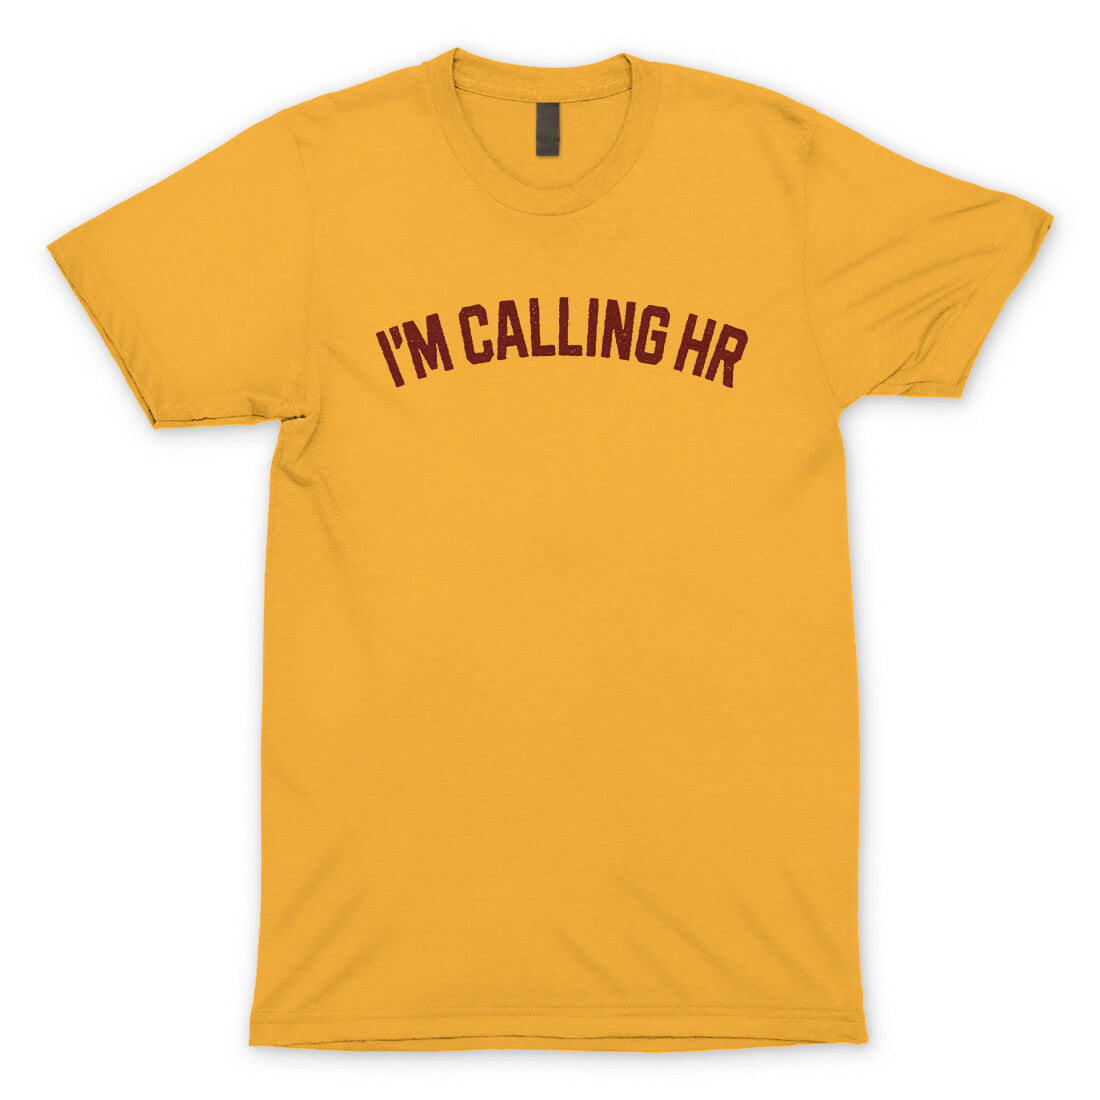 I'm Calling HR in Gold Color